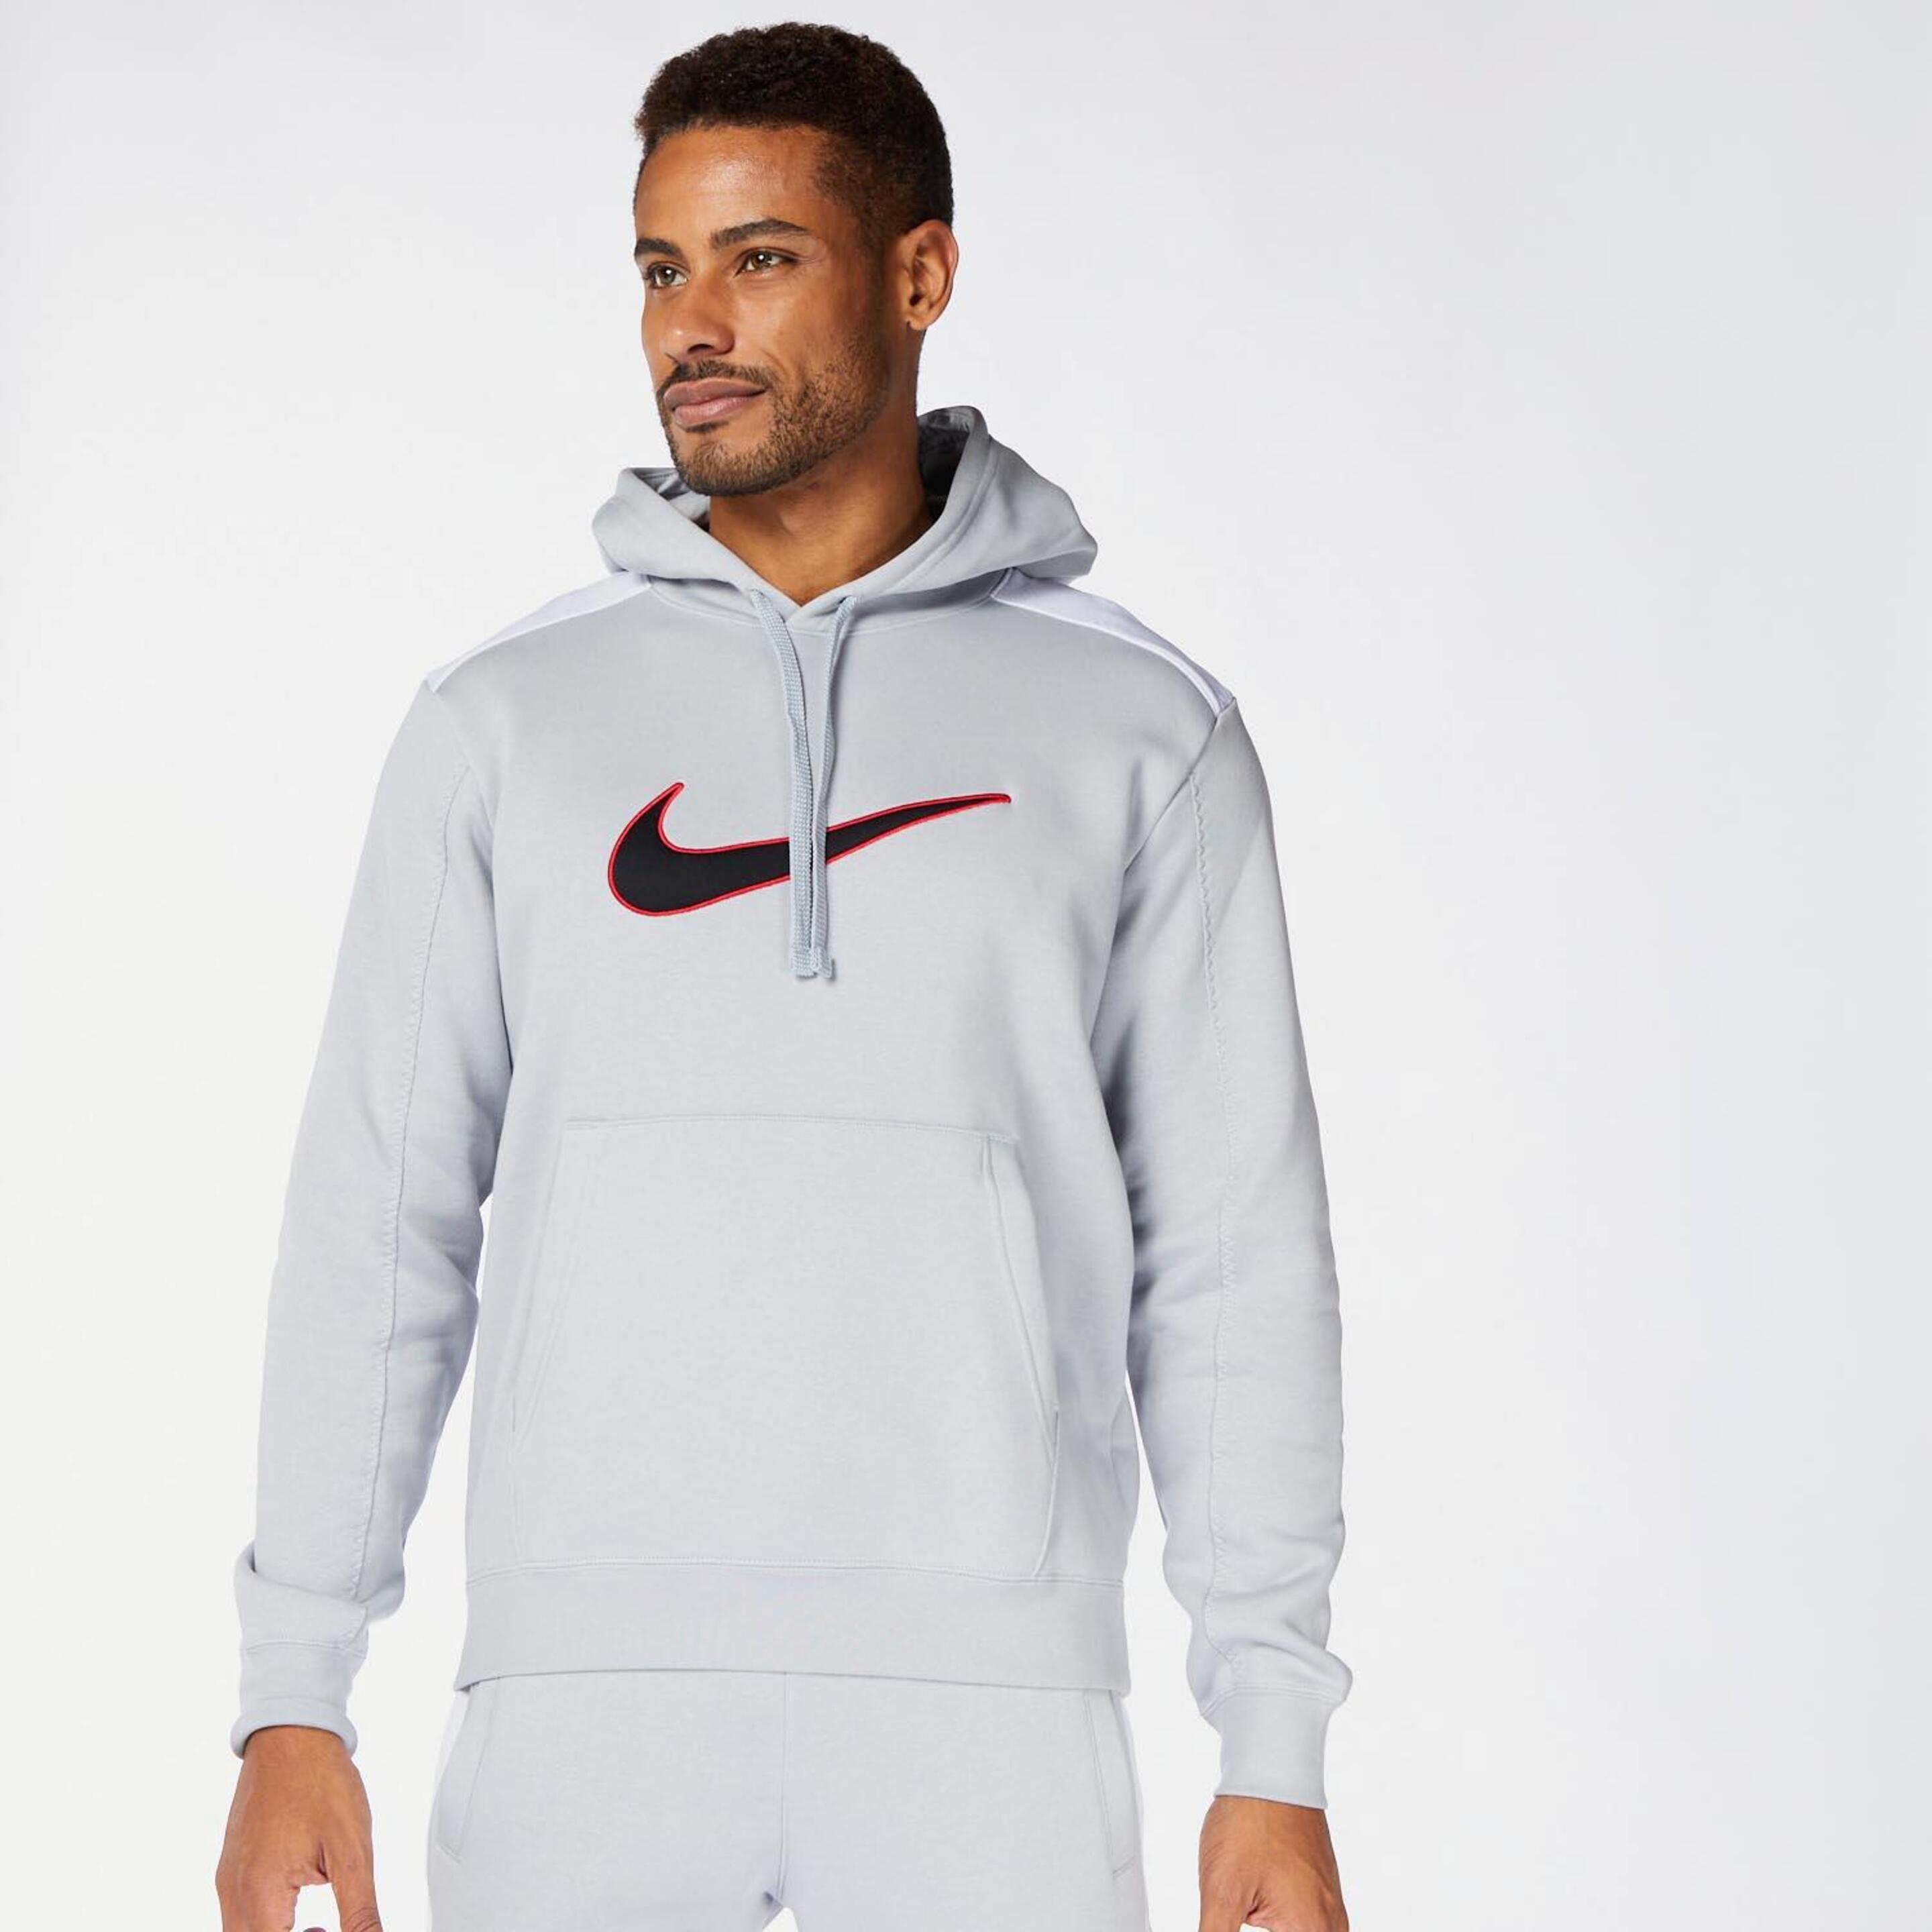 Nike Sport - gris - Sudadera Capucha Hombre